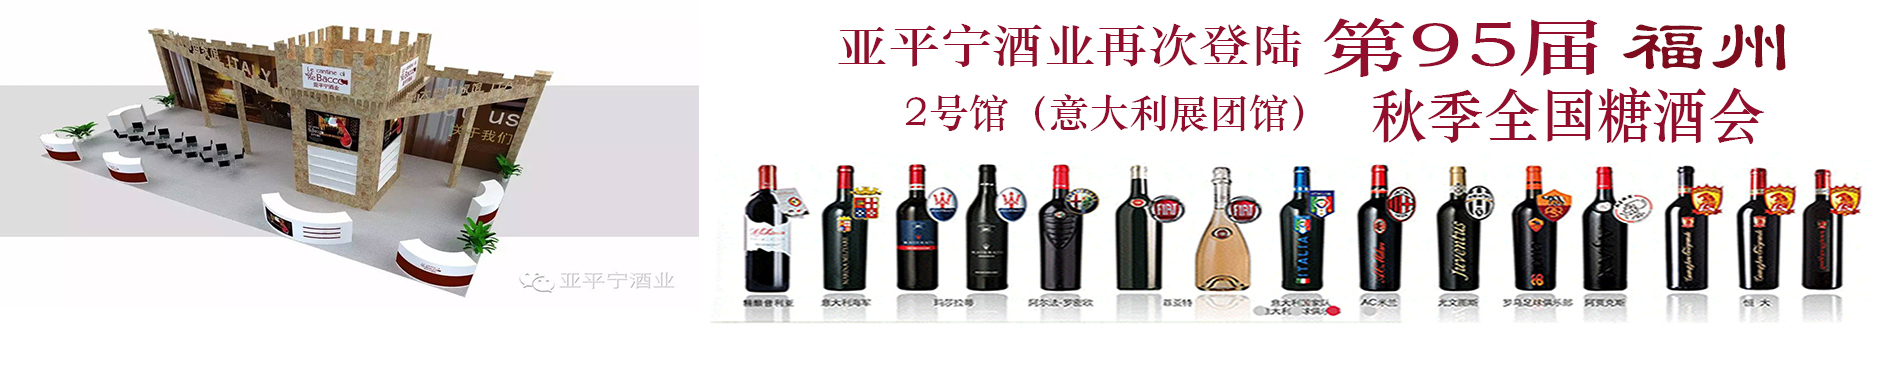 <b>福州，亚平宁酒业的“原瓶原装进口葡萄酒的搬运工又来了”</b>